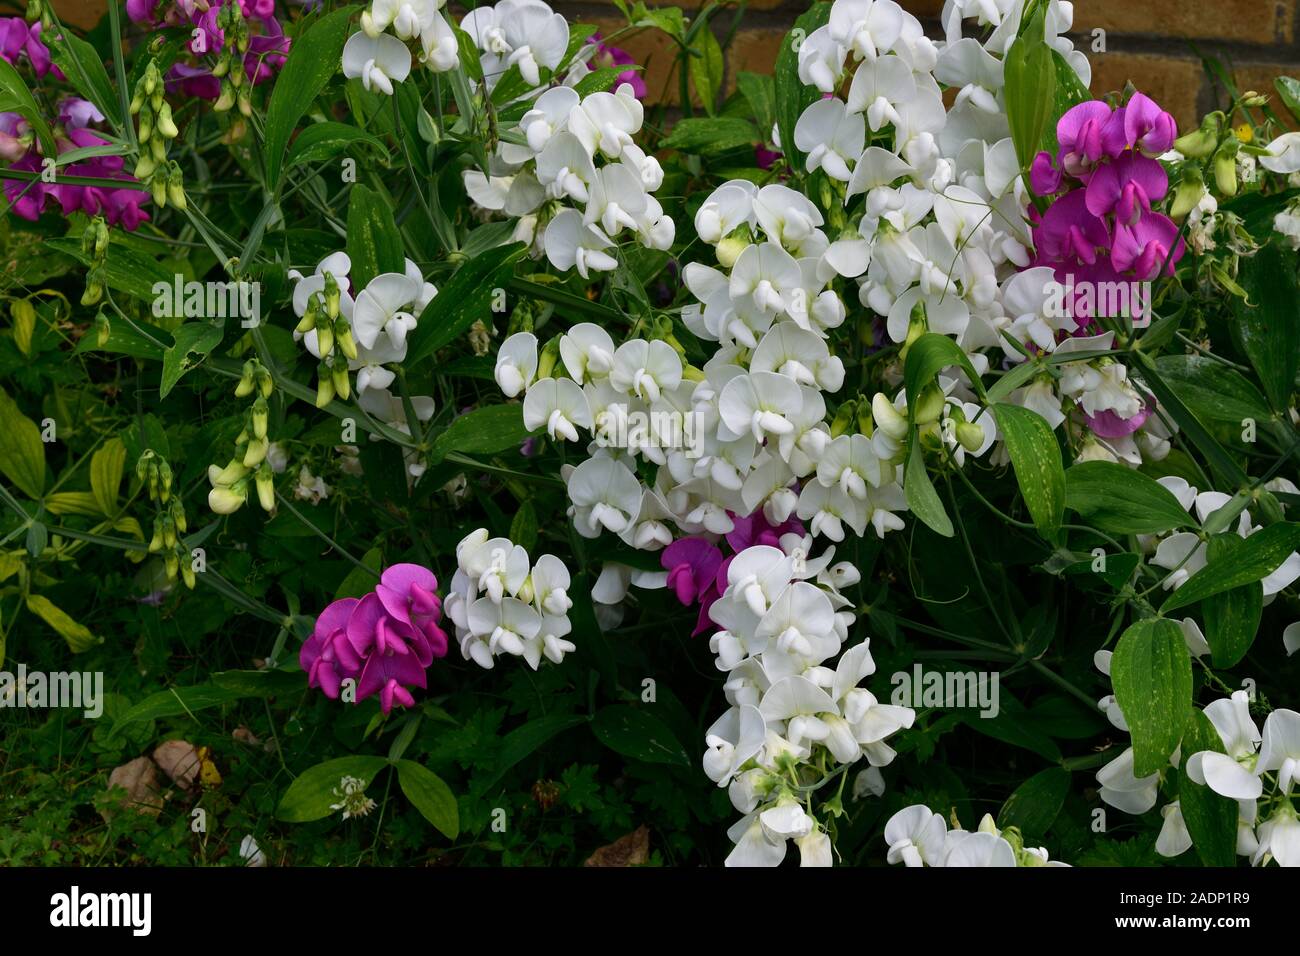 Everlasting Sweet Pea or Lathyrus latifolios. Close up of white and purple flowers. Stock Photo